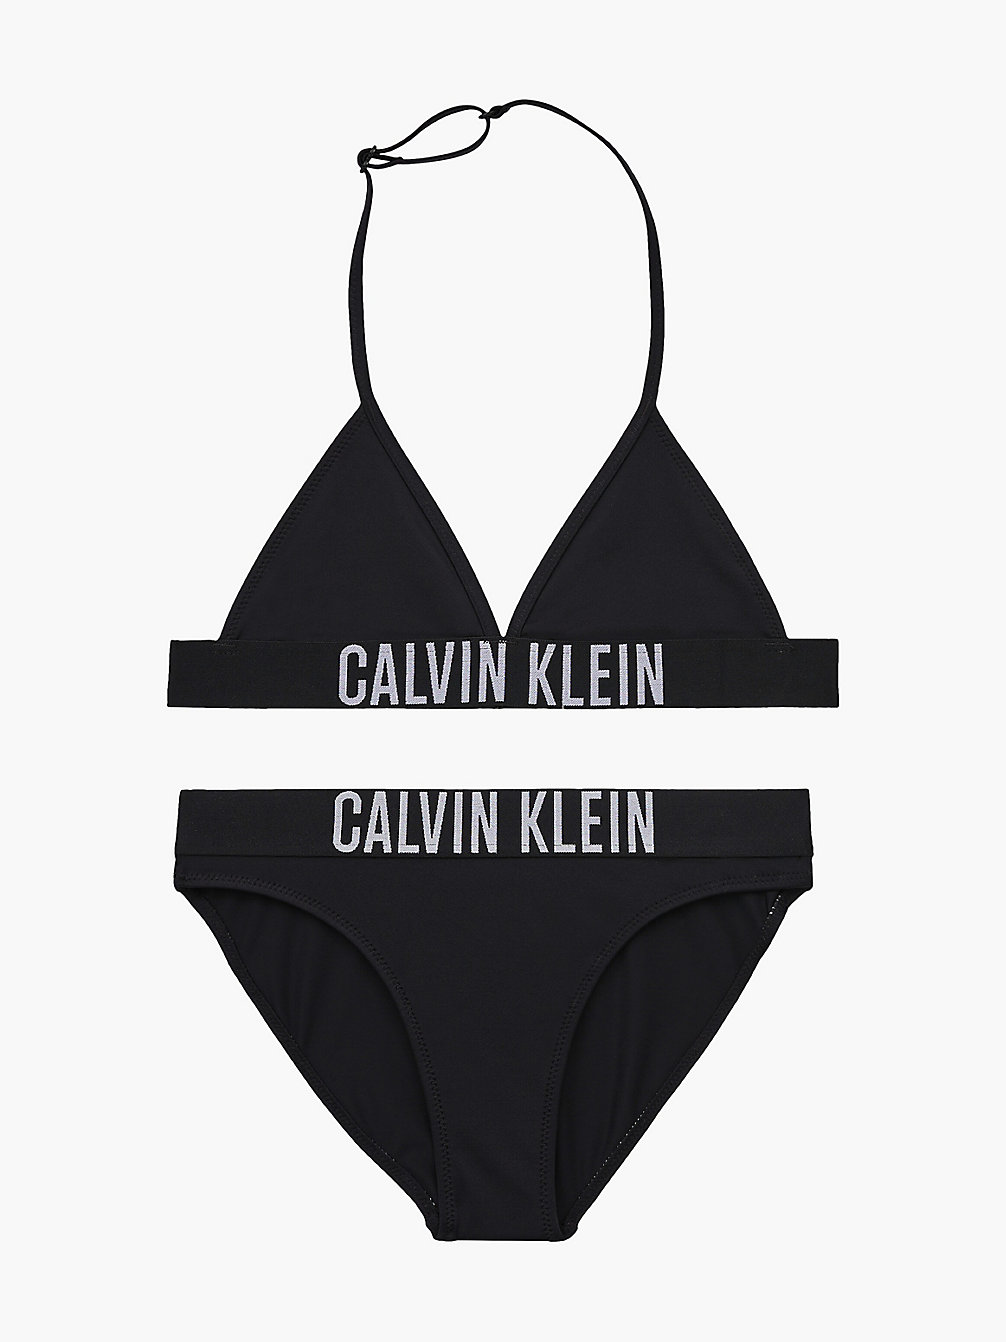 PVH BLACK > Triangelbikini Voor Meisjes - Intense Power > undefined meisjes - Calvin Klein